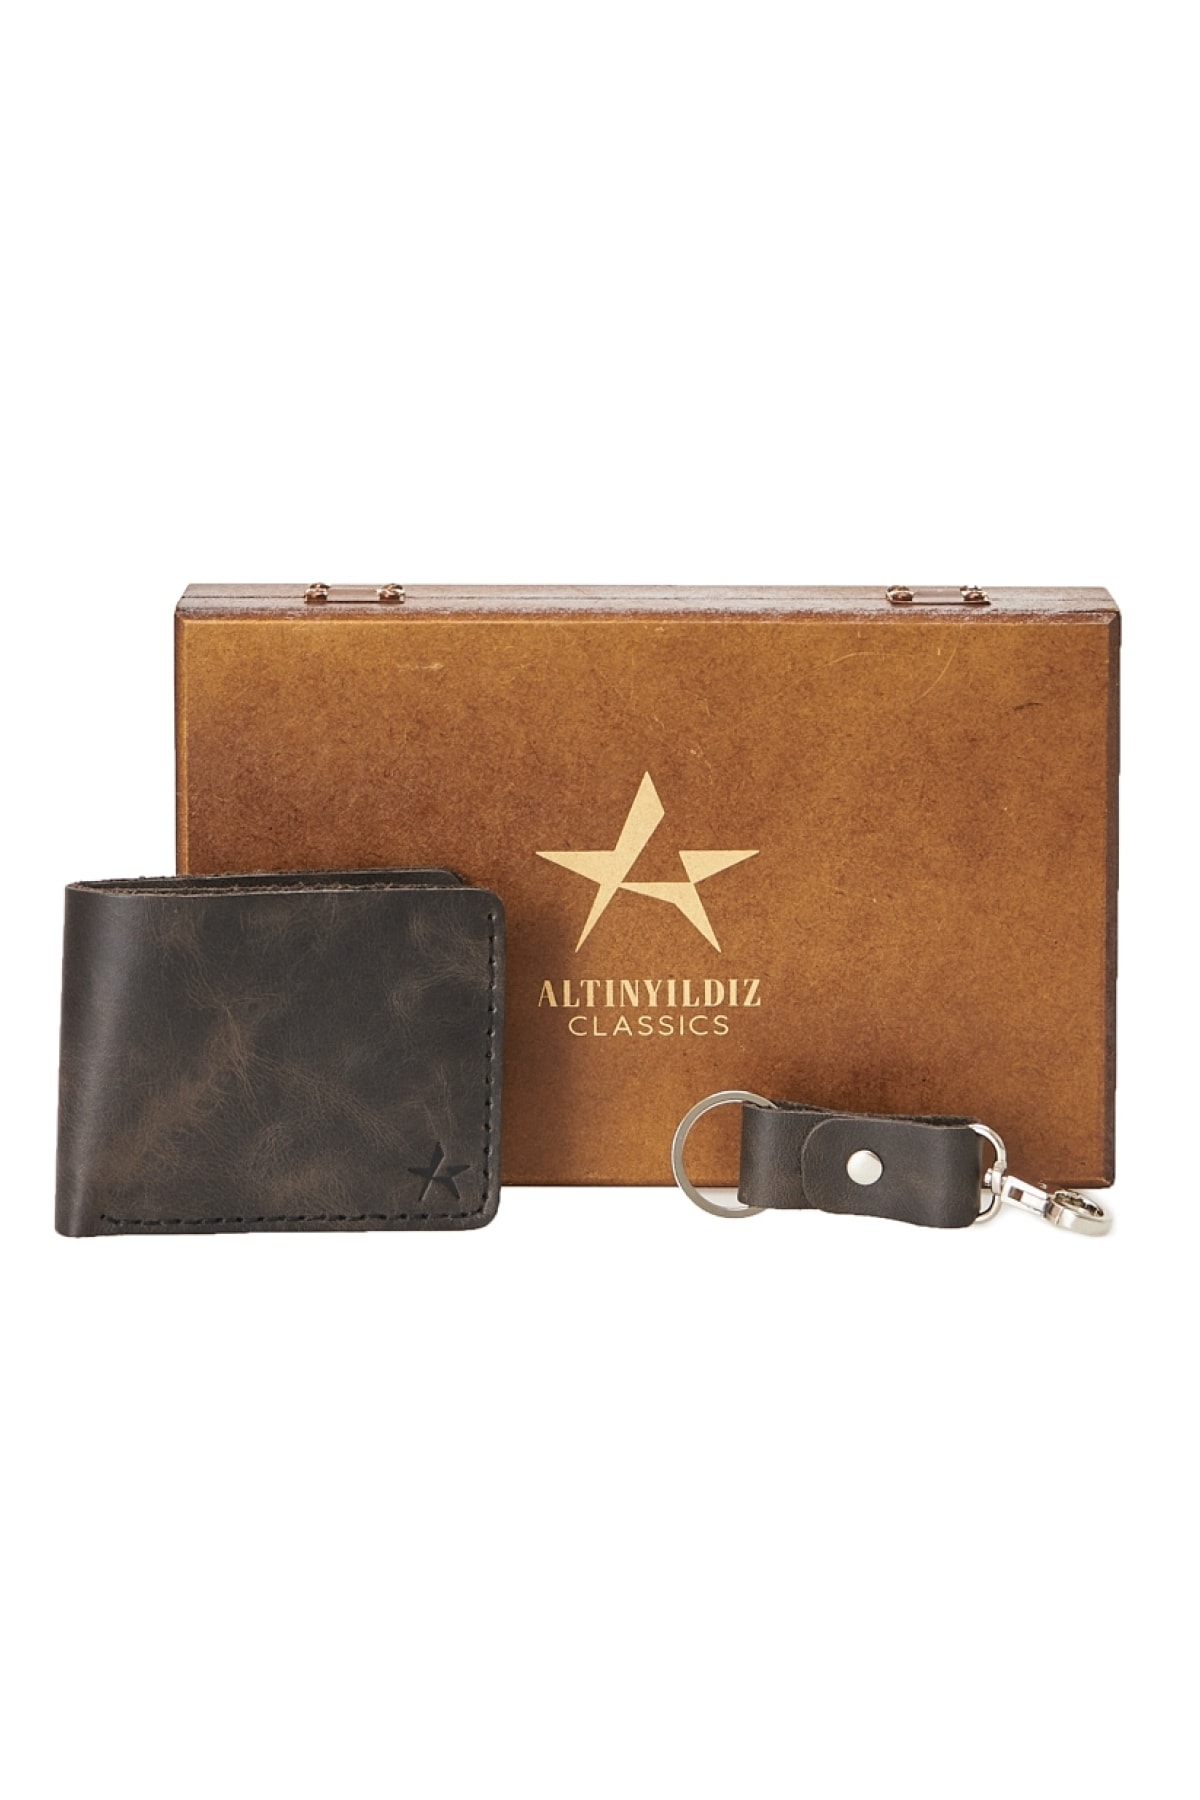 ALTINYILDIZ CLASSICS Men's Black Special Gift Boxed 100% Genuine Leather Wallet-Keychain Set